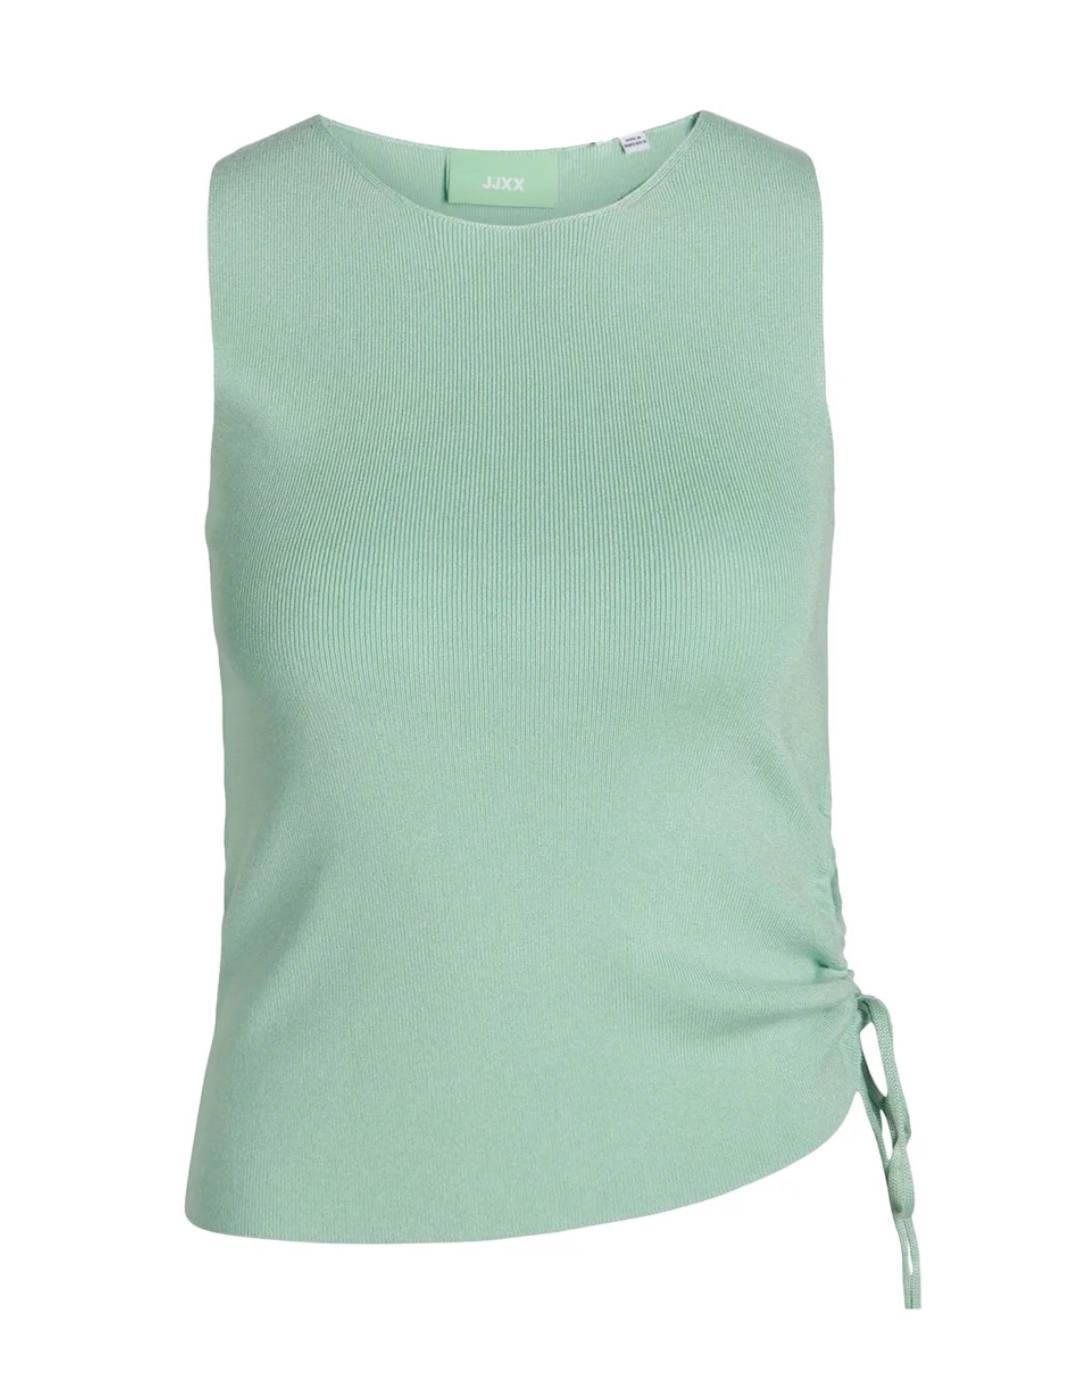 Camiseta JJXX Dahlia verde agua mnaga sisa para mujer